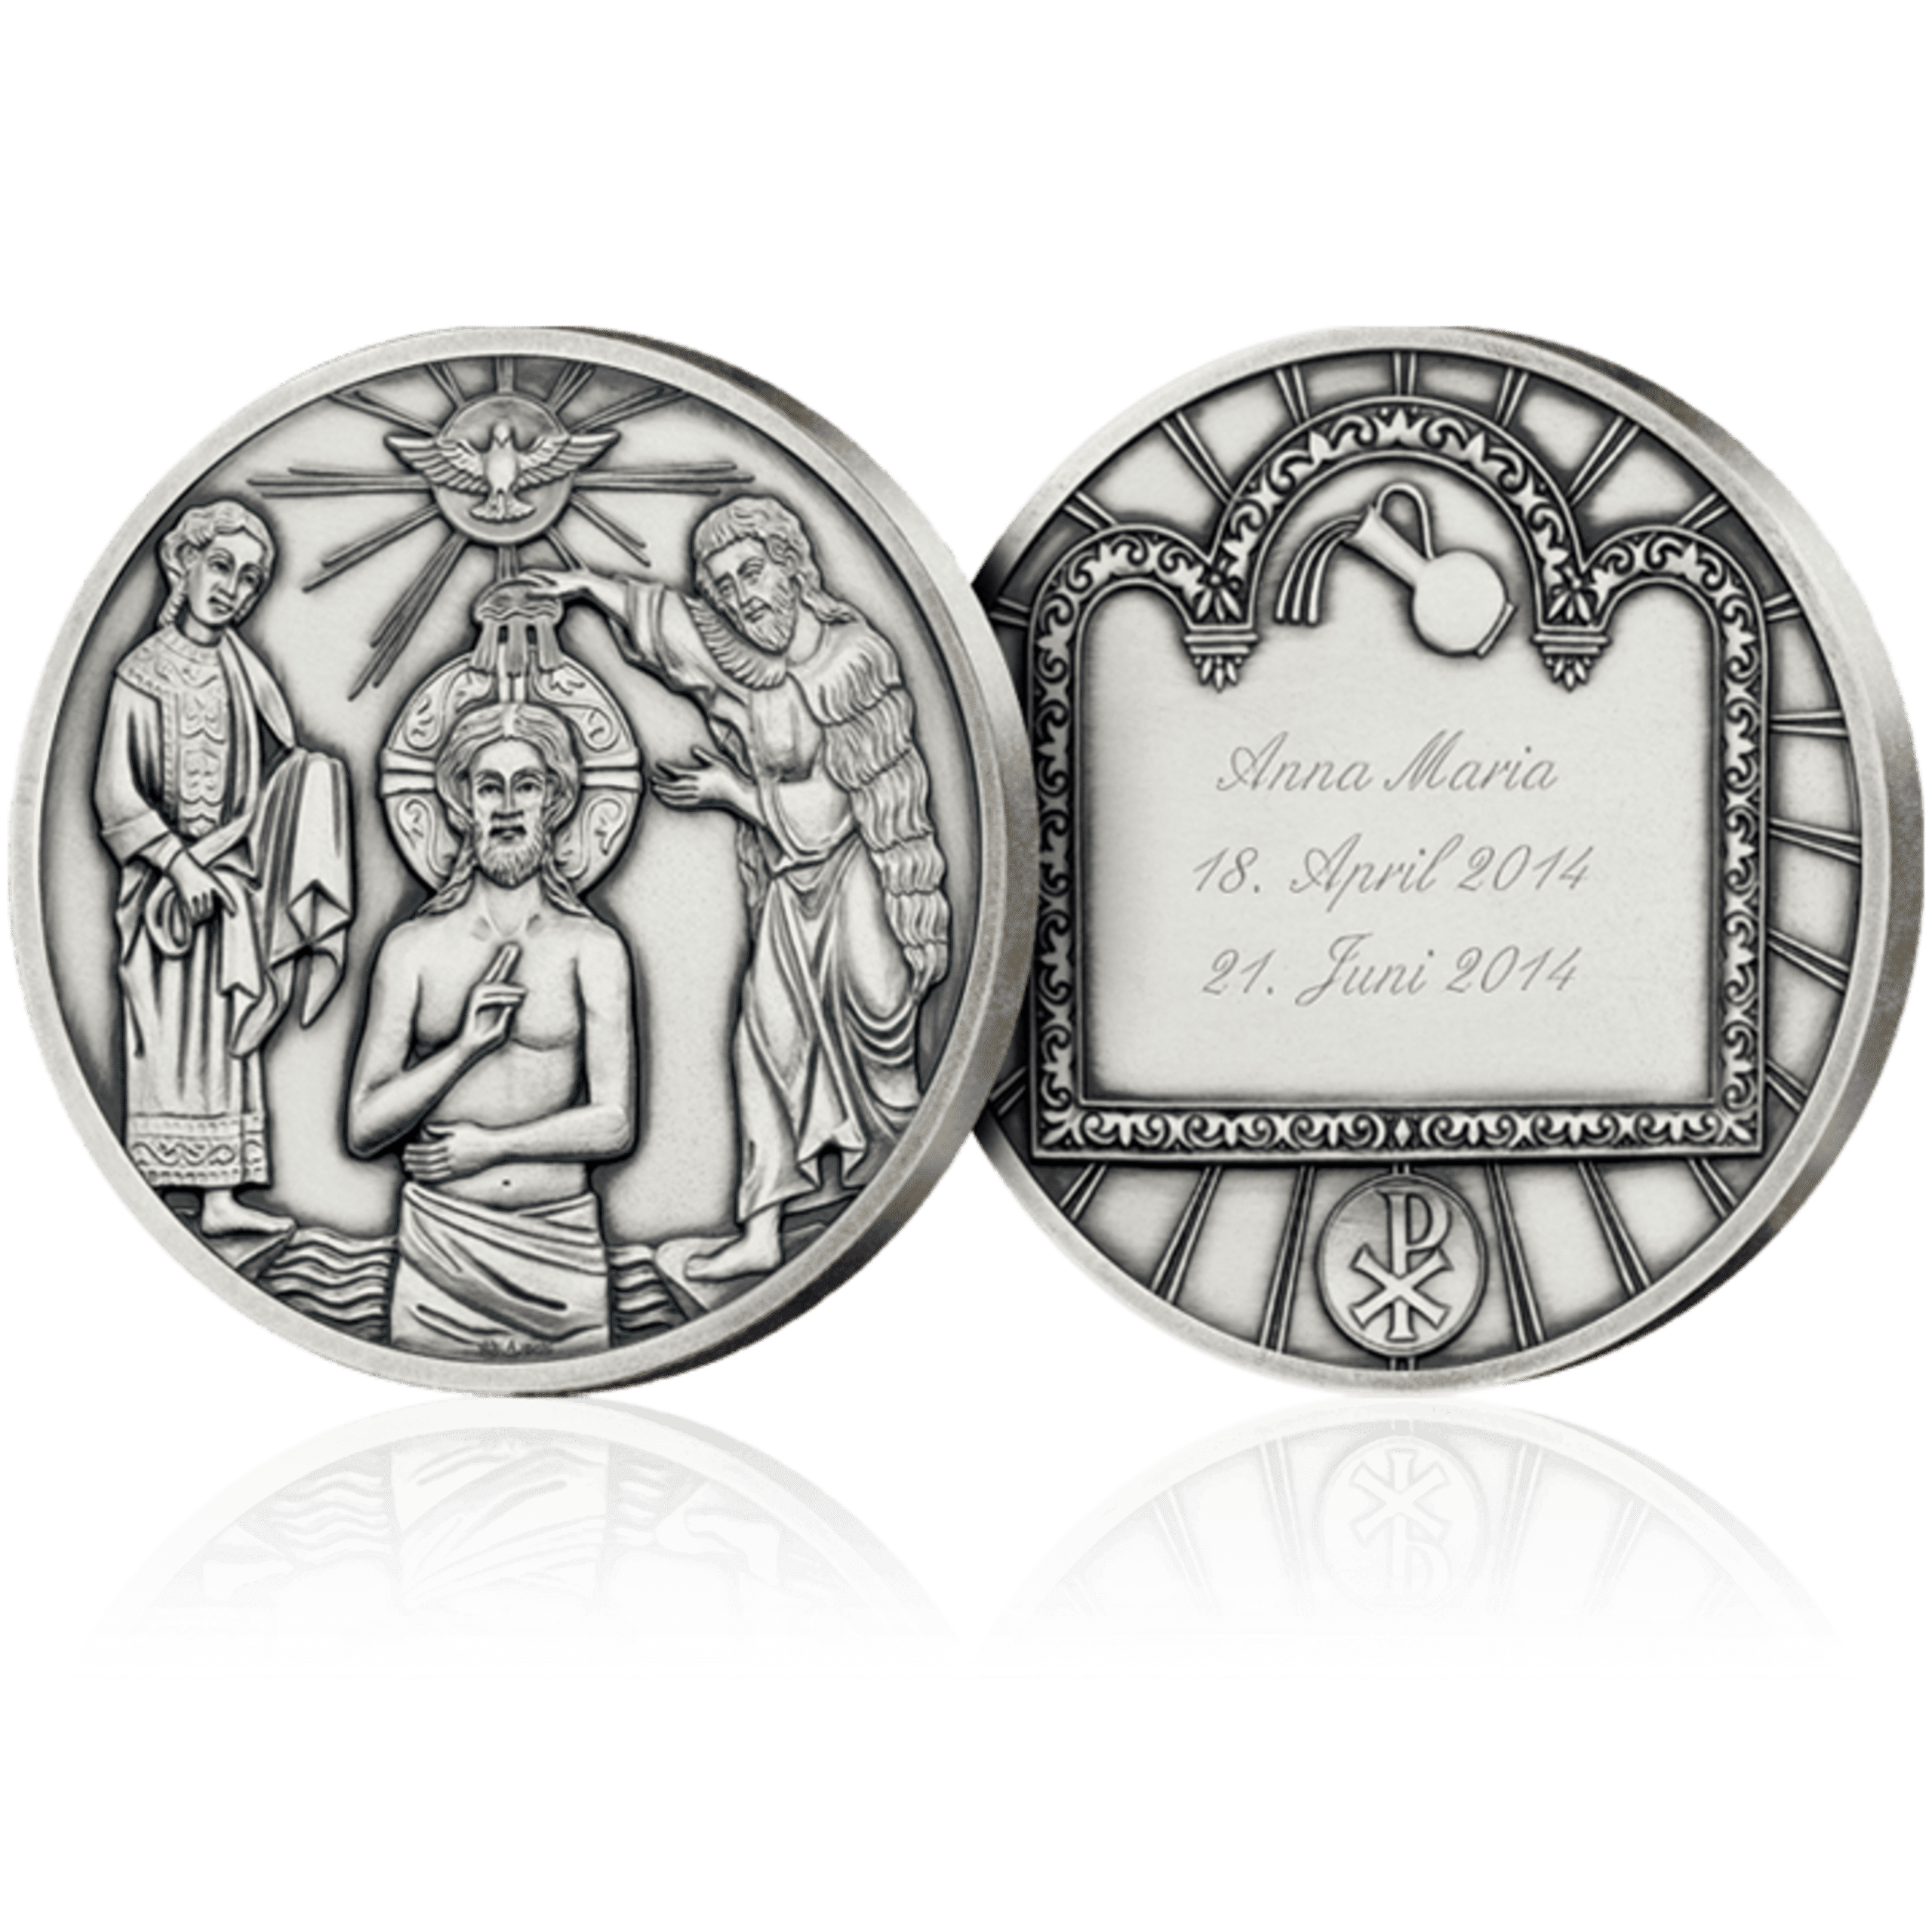 Christening Medal